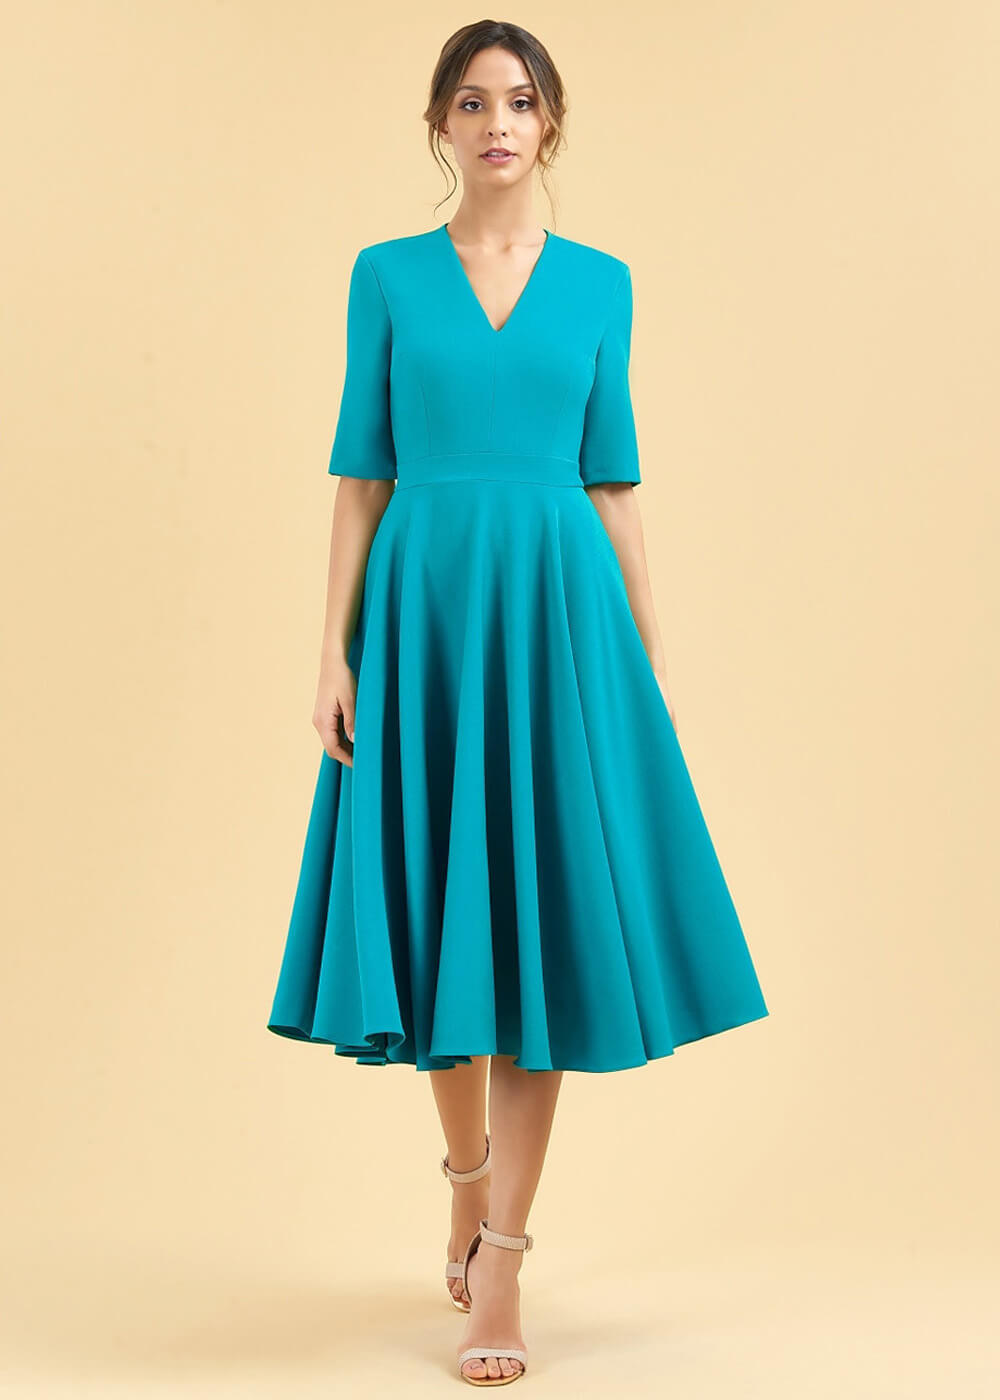 Fonetiek vrijgesteld Actuator Pretty Dress Company Myla Midi 50's Swing Jurk Turquoise – Succubus.nl